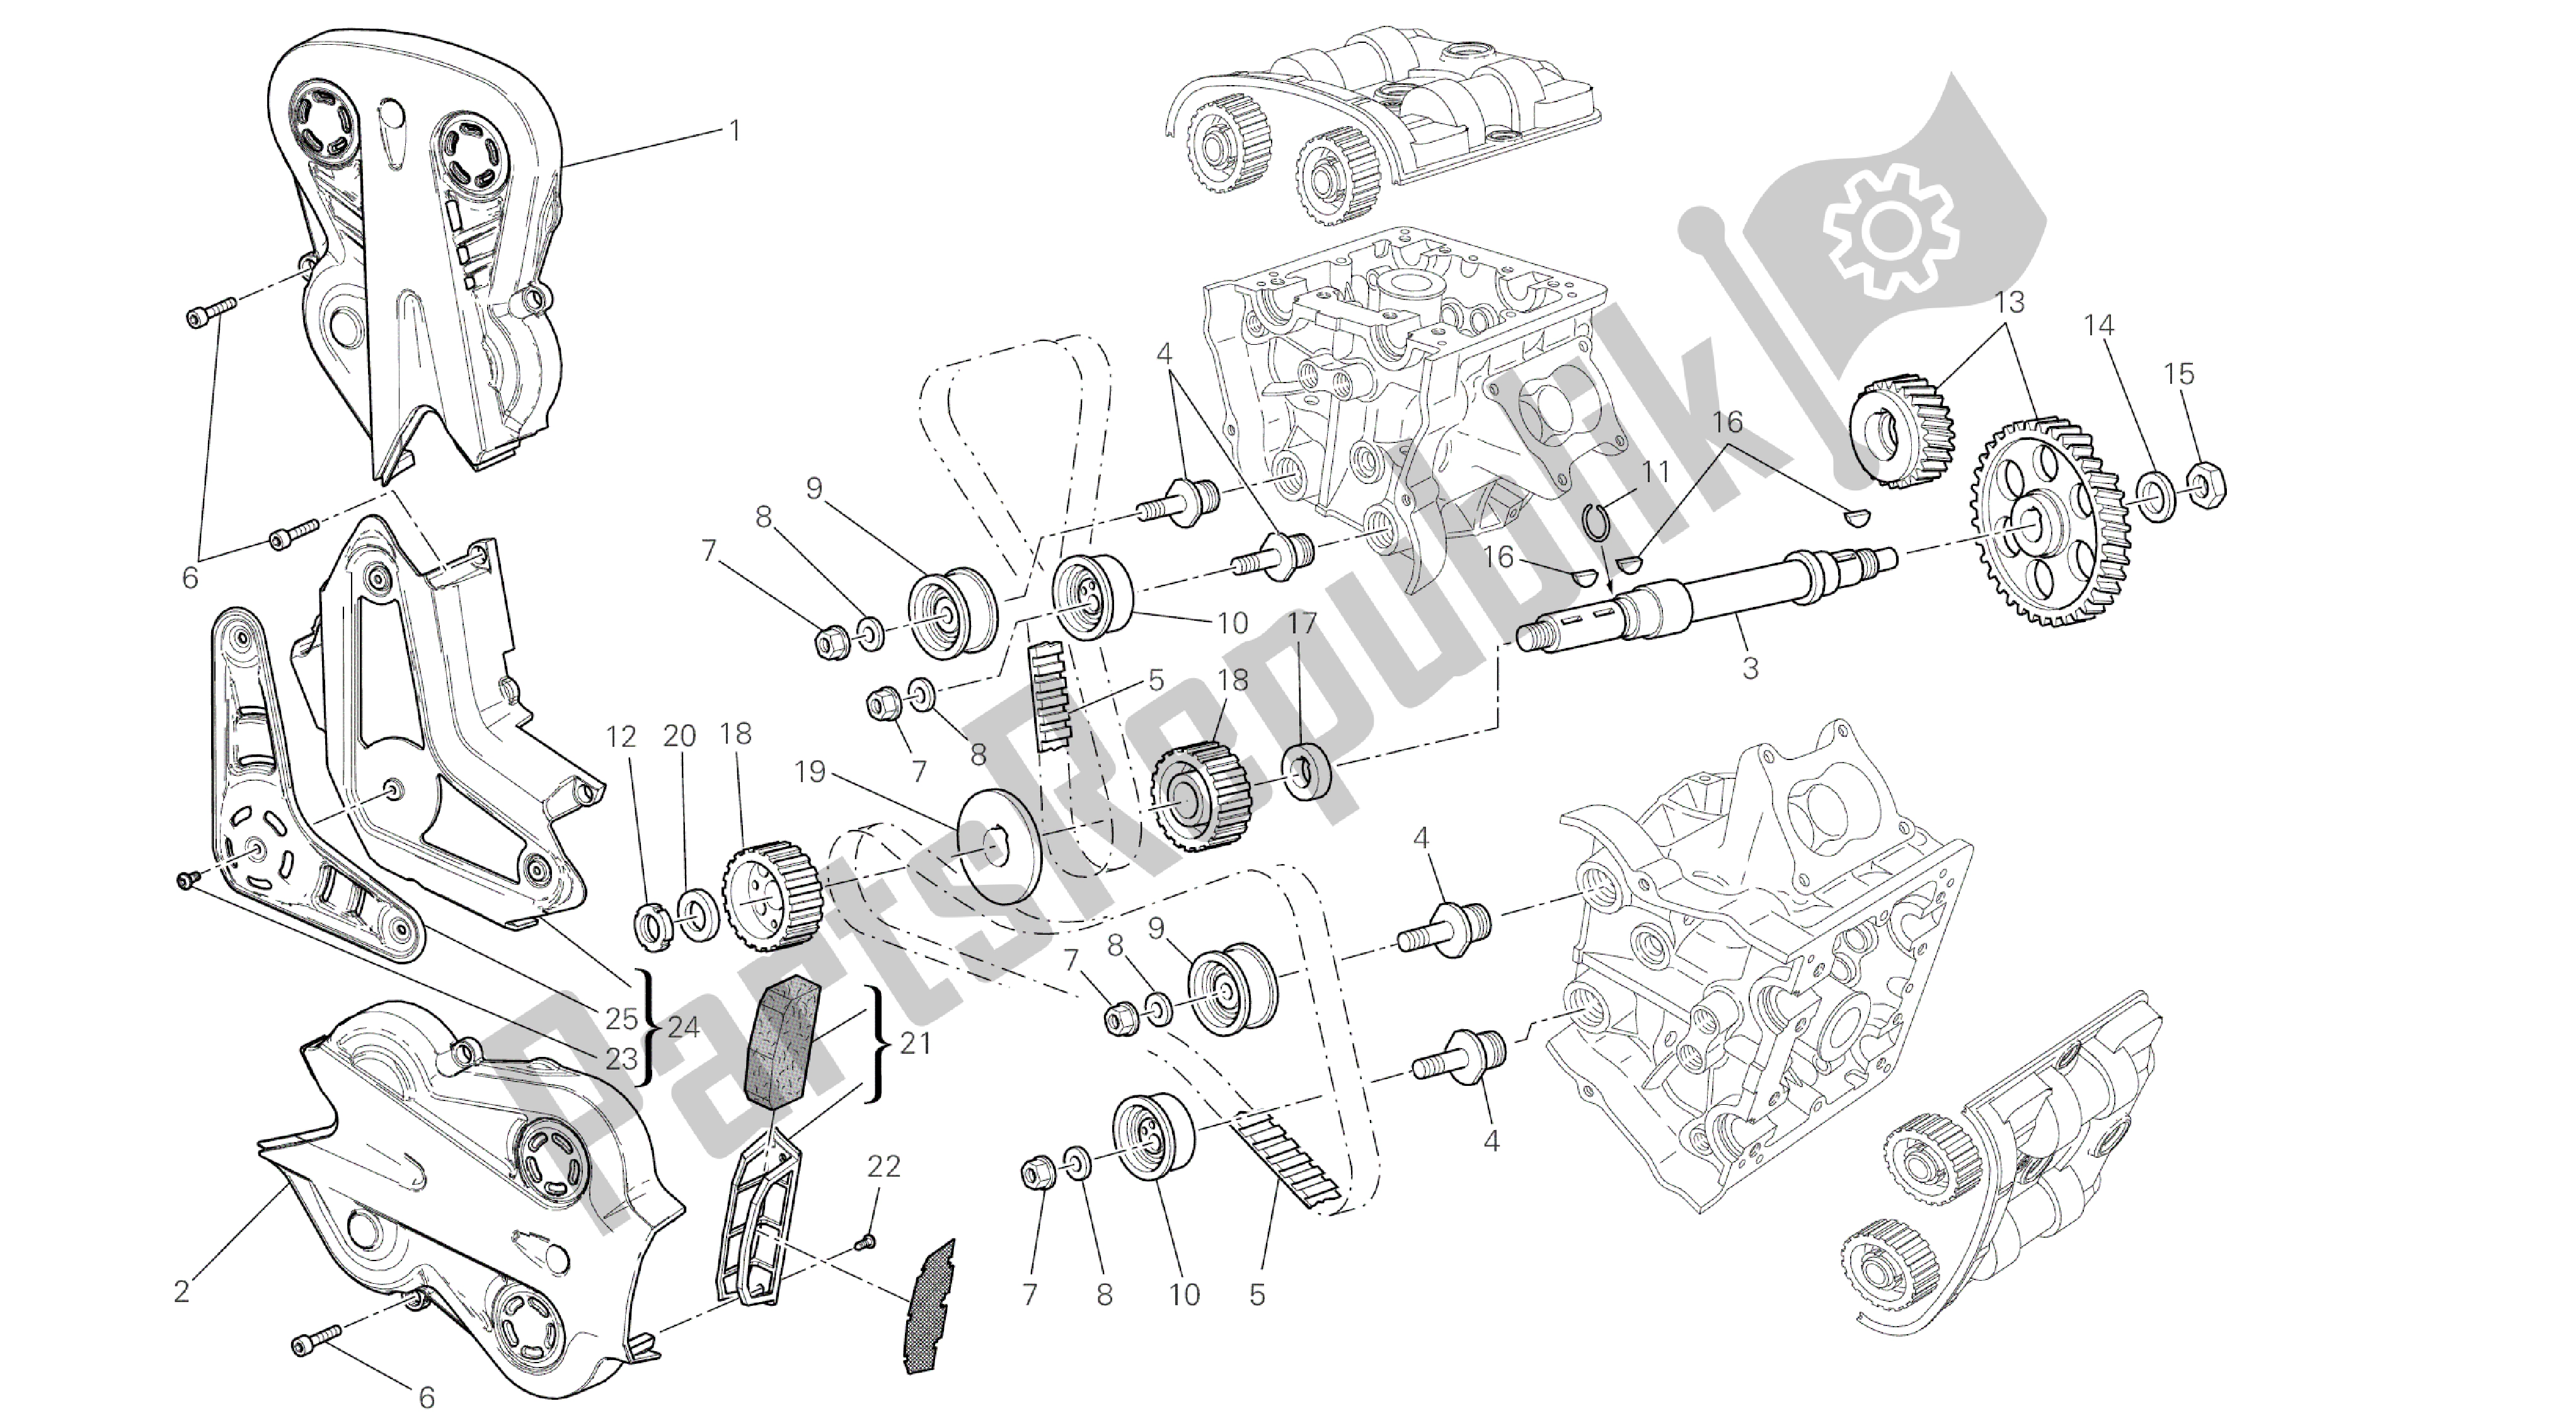 Todas las partes para Dibujo 008 - Motor De Grupo Distribuzione [mod: Dvl] de Ducati Diavel 1200 2016